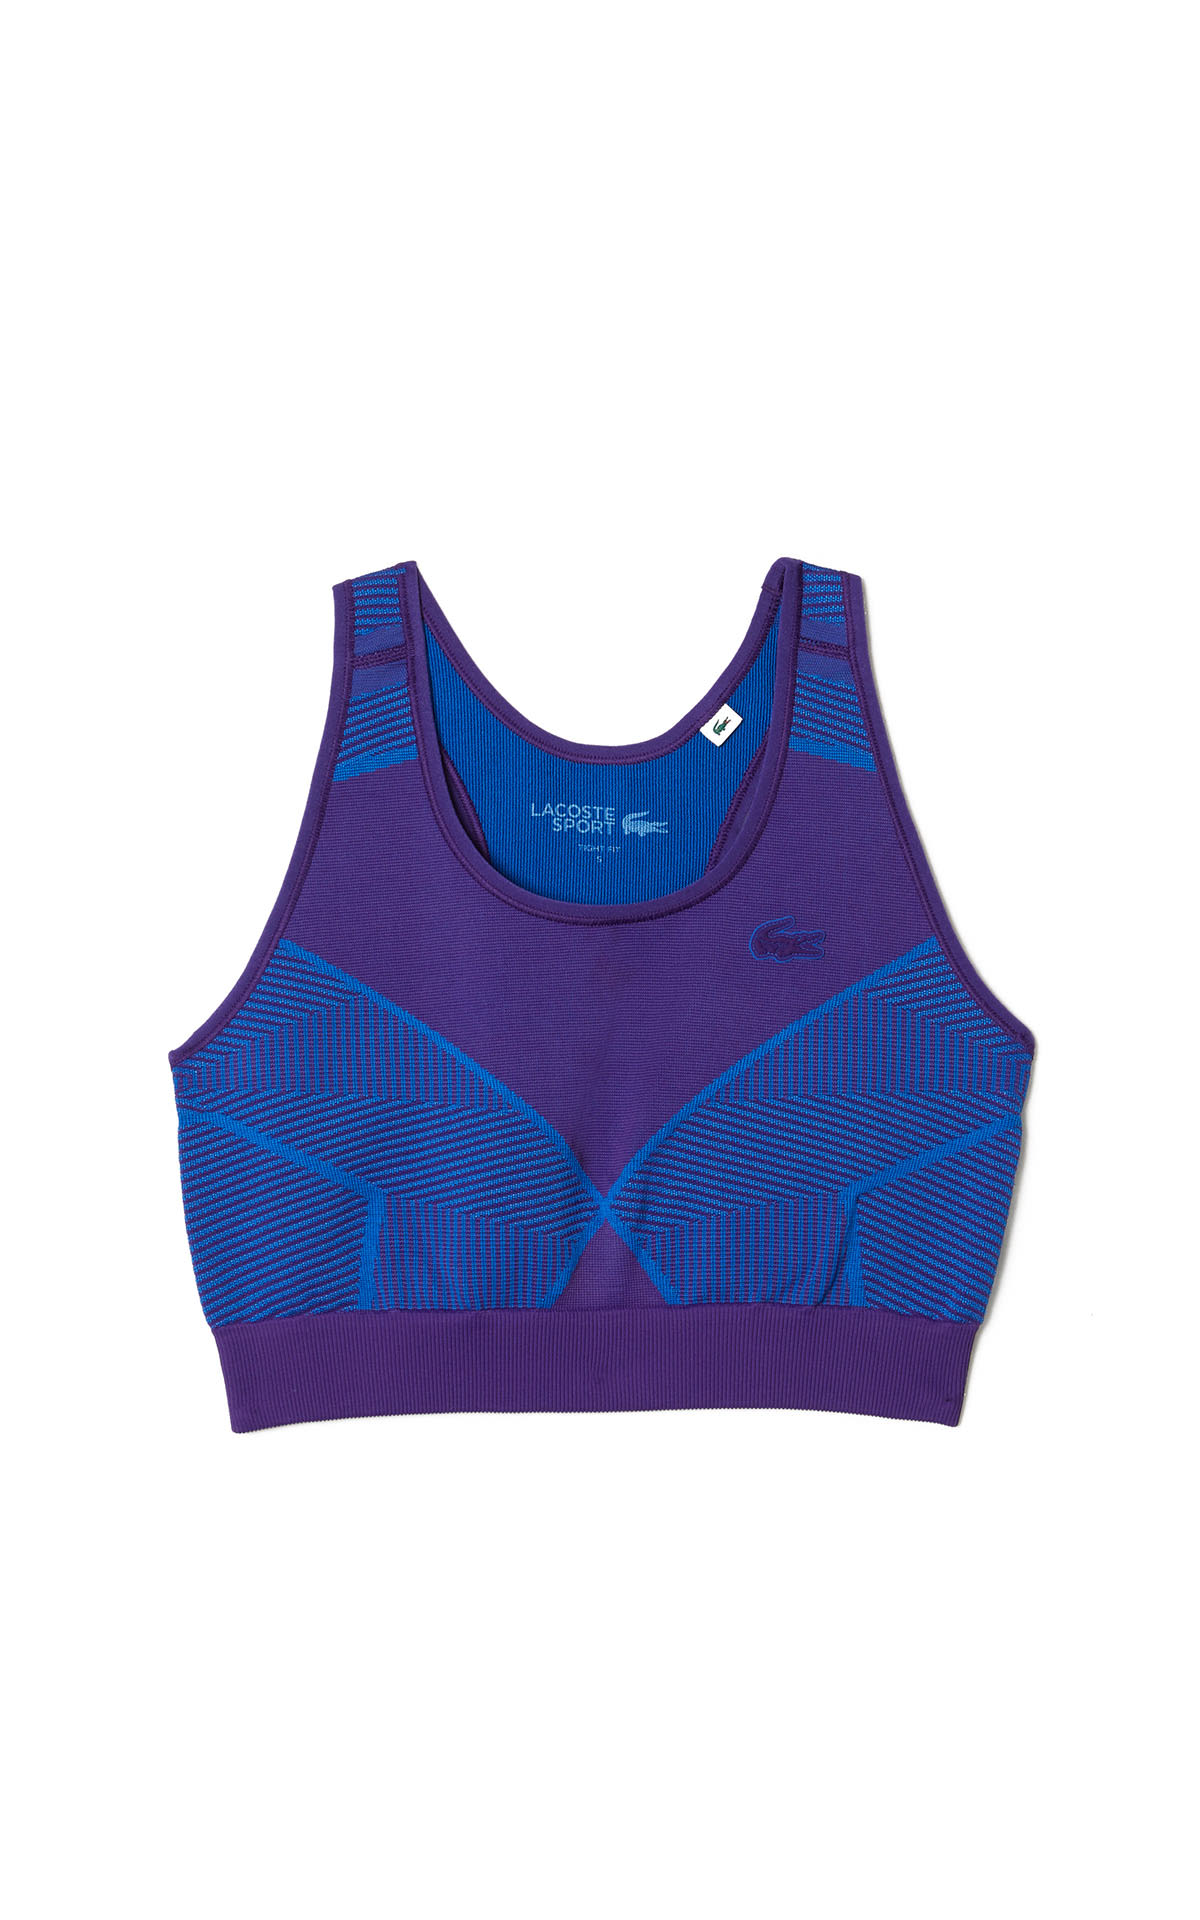 Blue and purple sport bra Lacoste